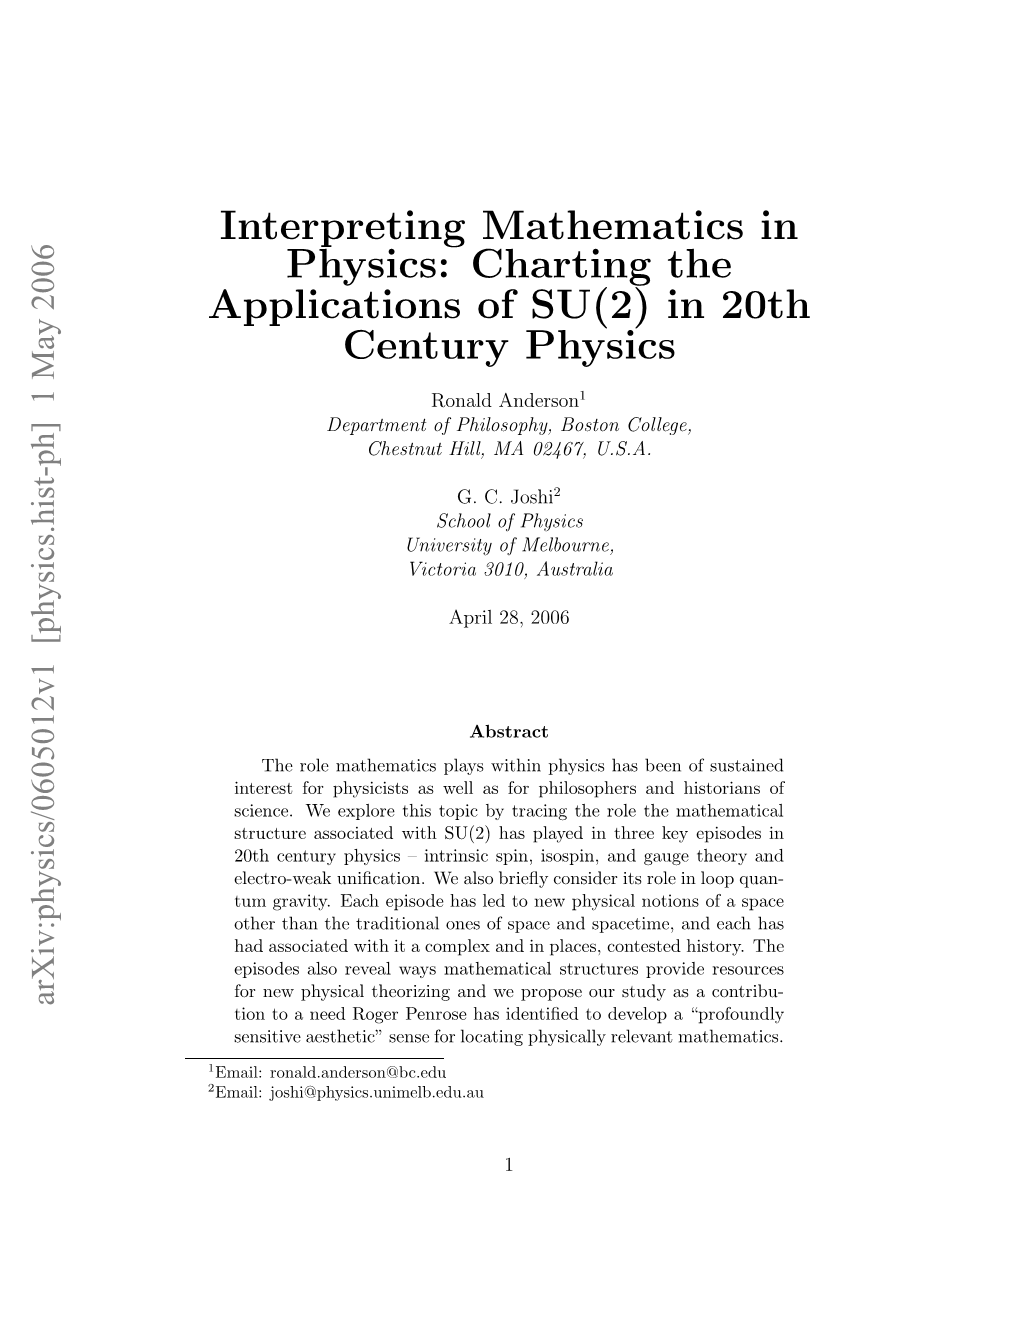 Interpreting Mathematics in Physics: Charting the Applications of SU(2)